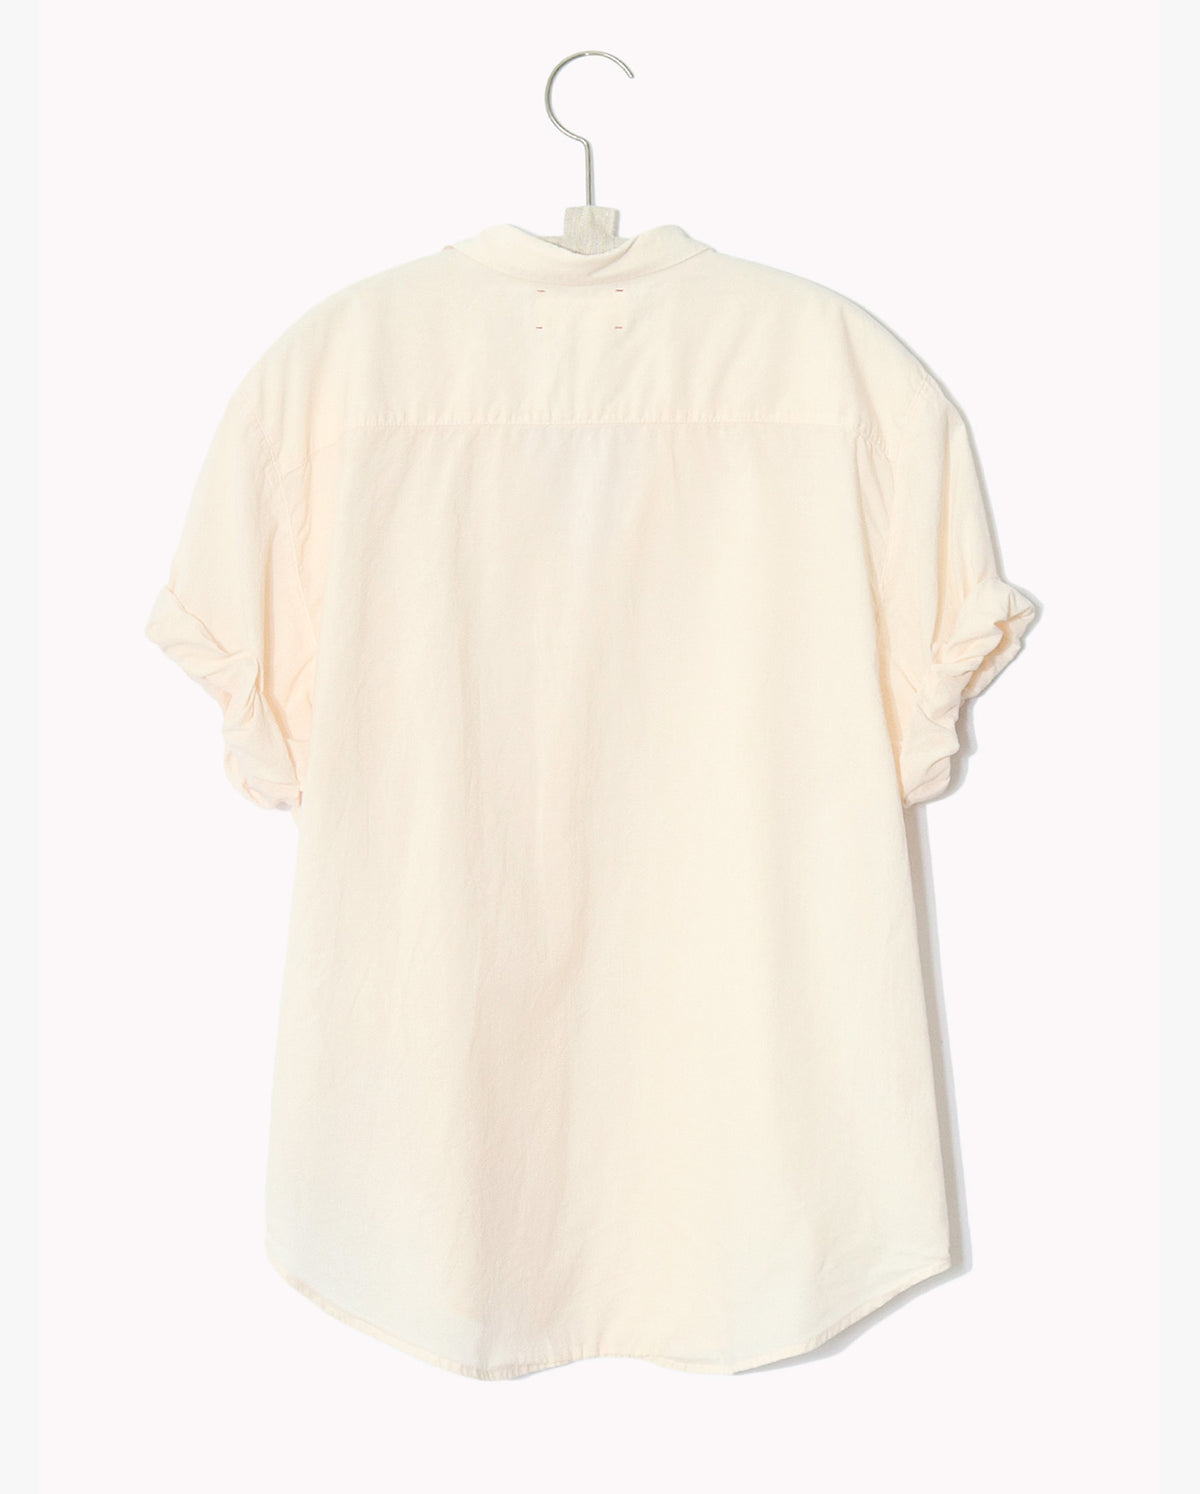 Channing Shirt - Cream